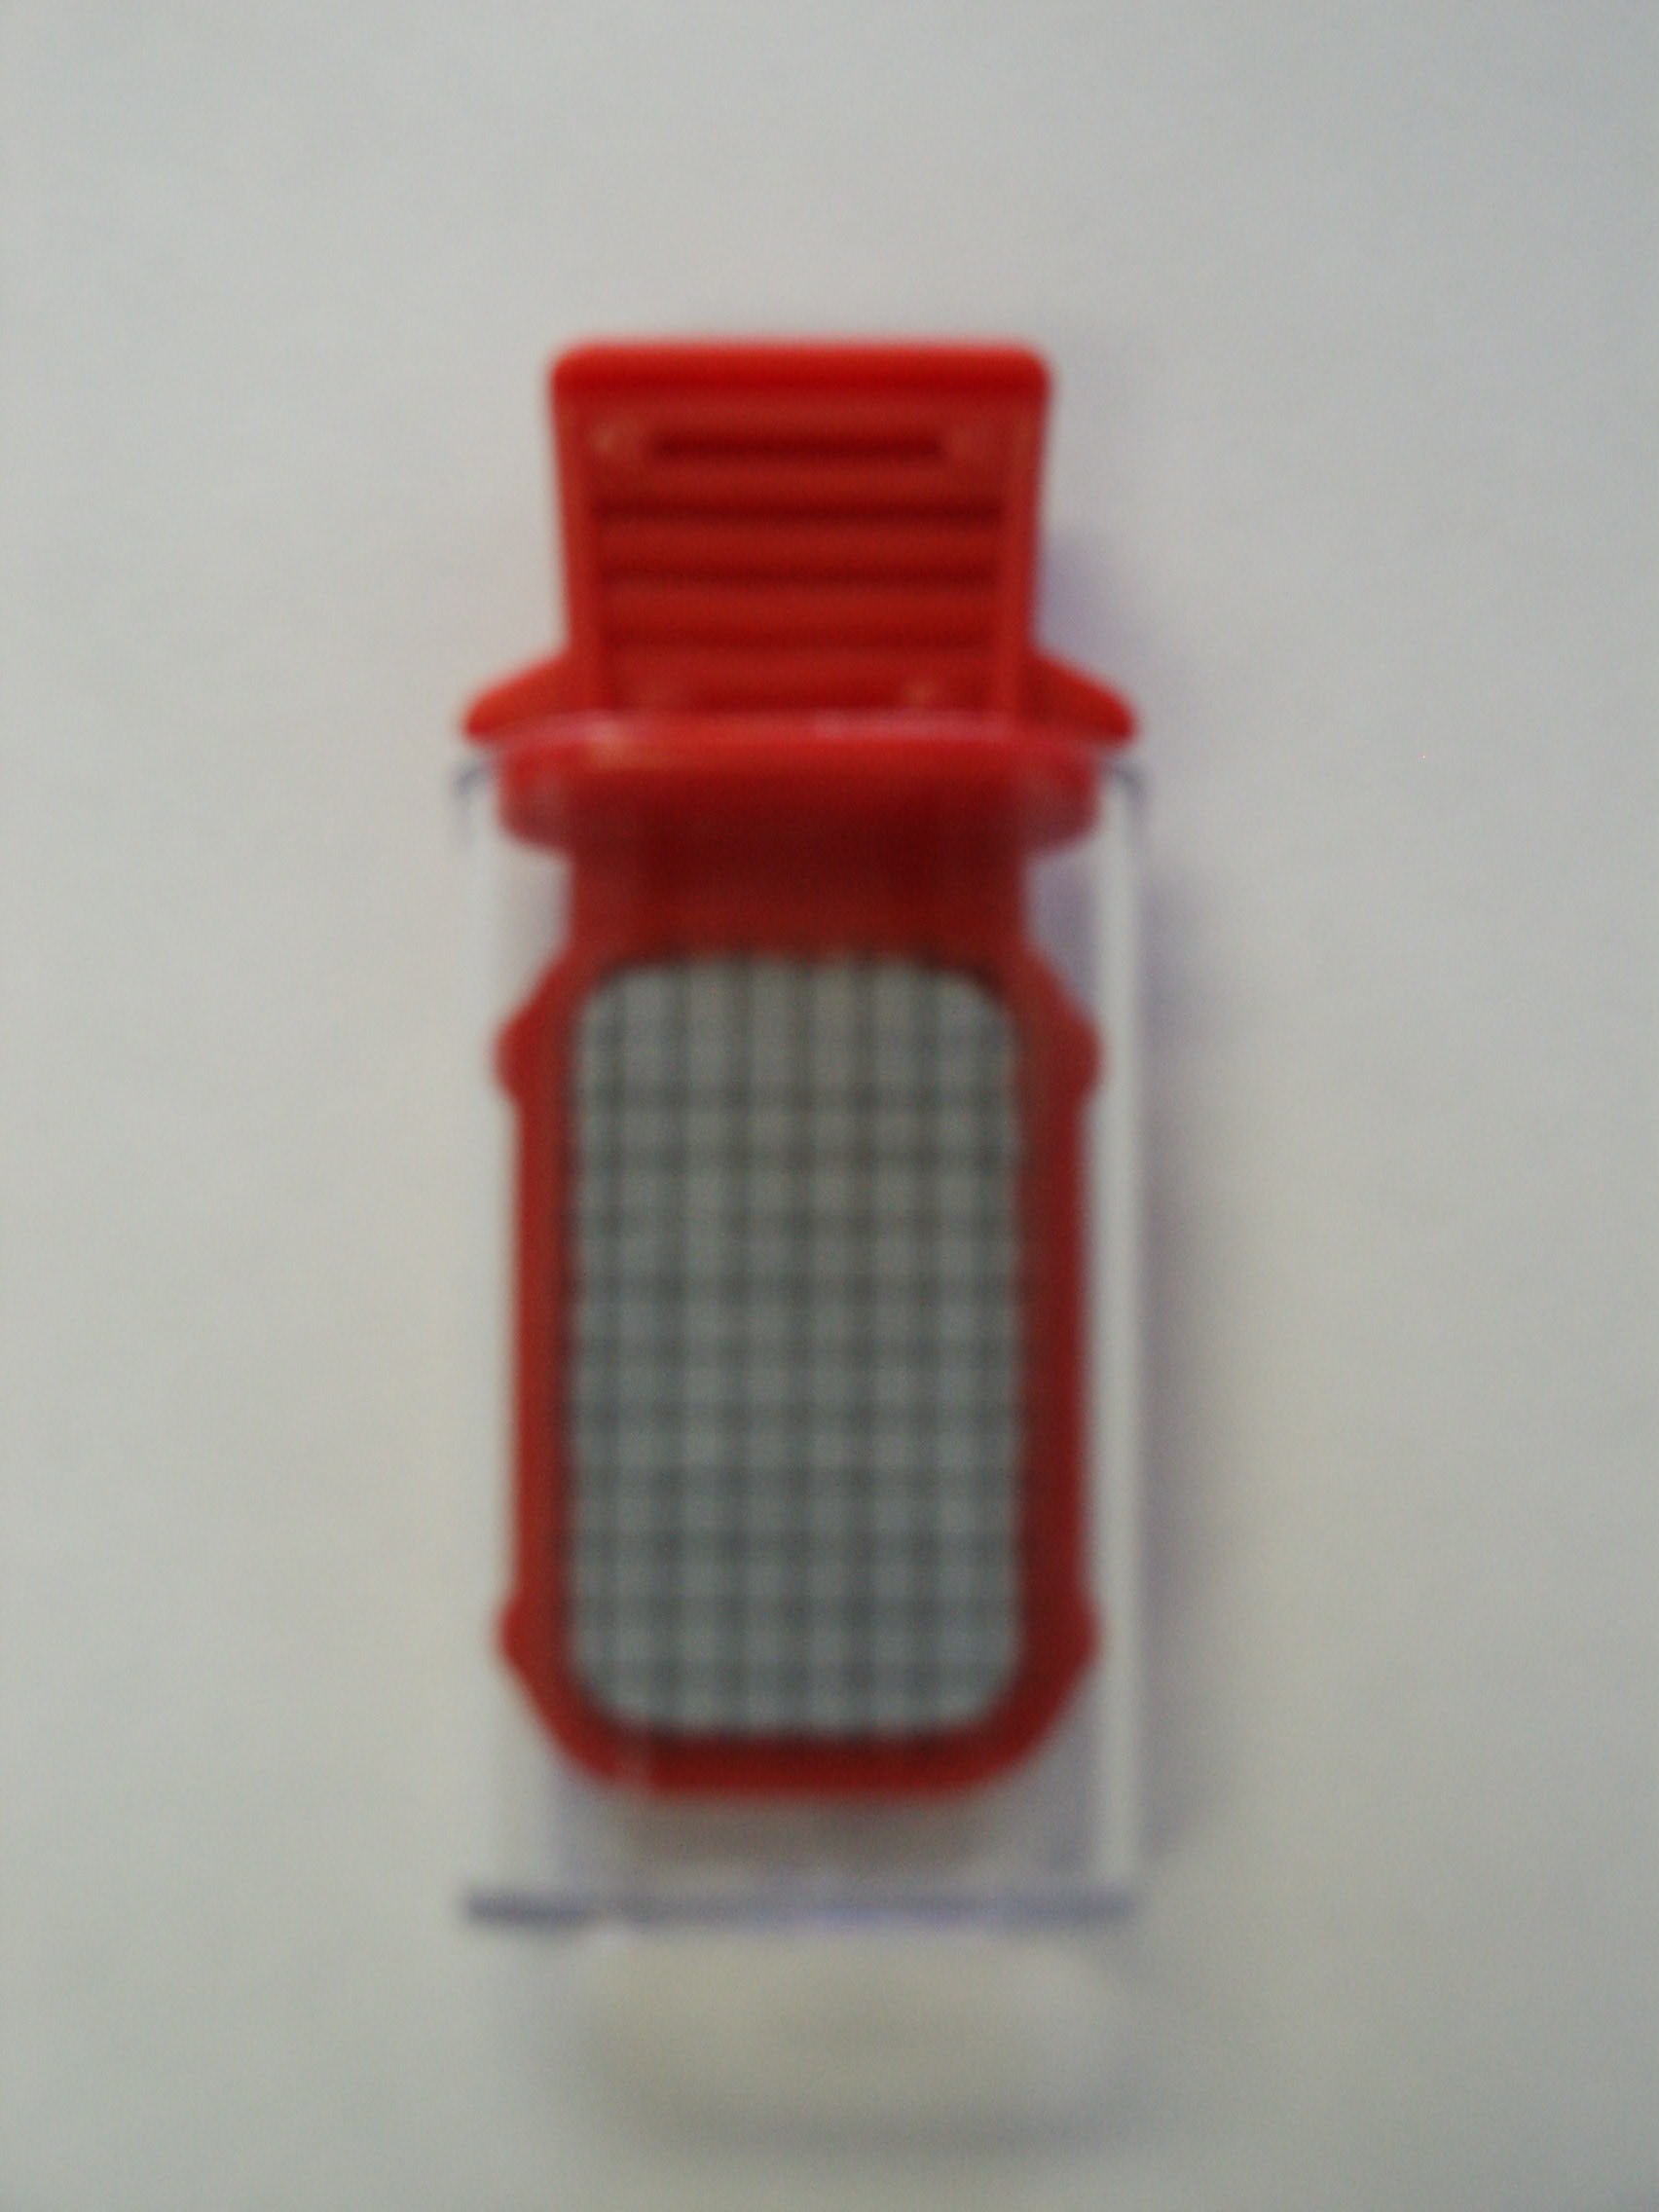 Bacteria Sampler 5 Test Kits